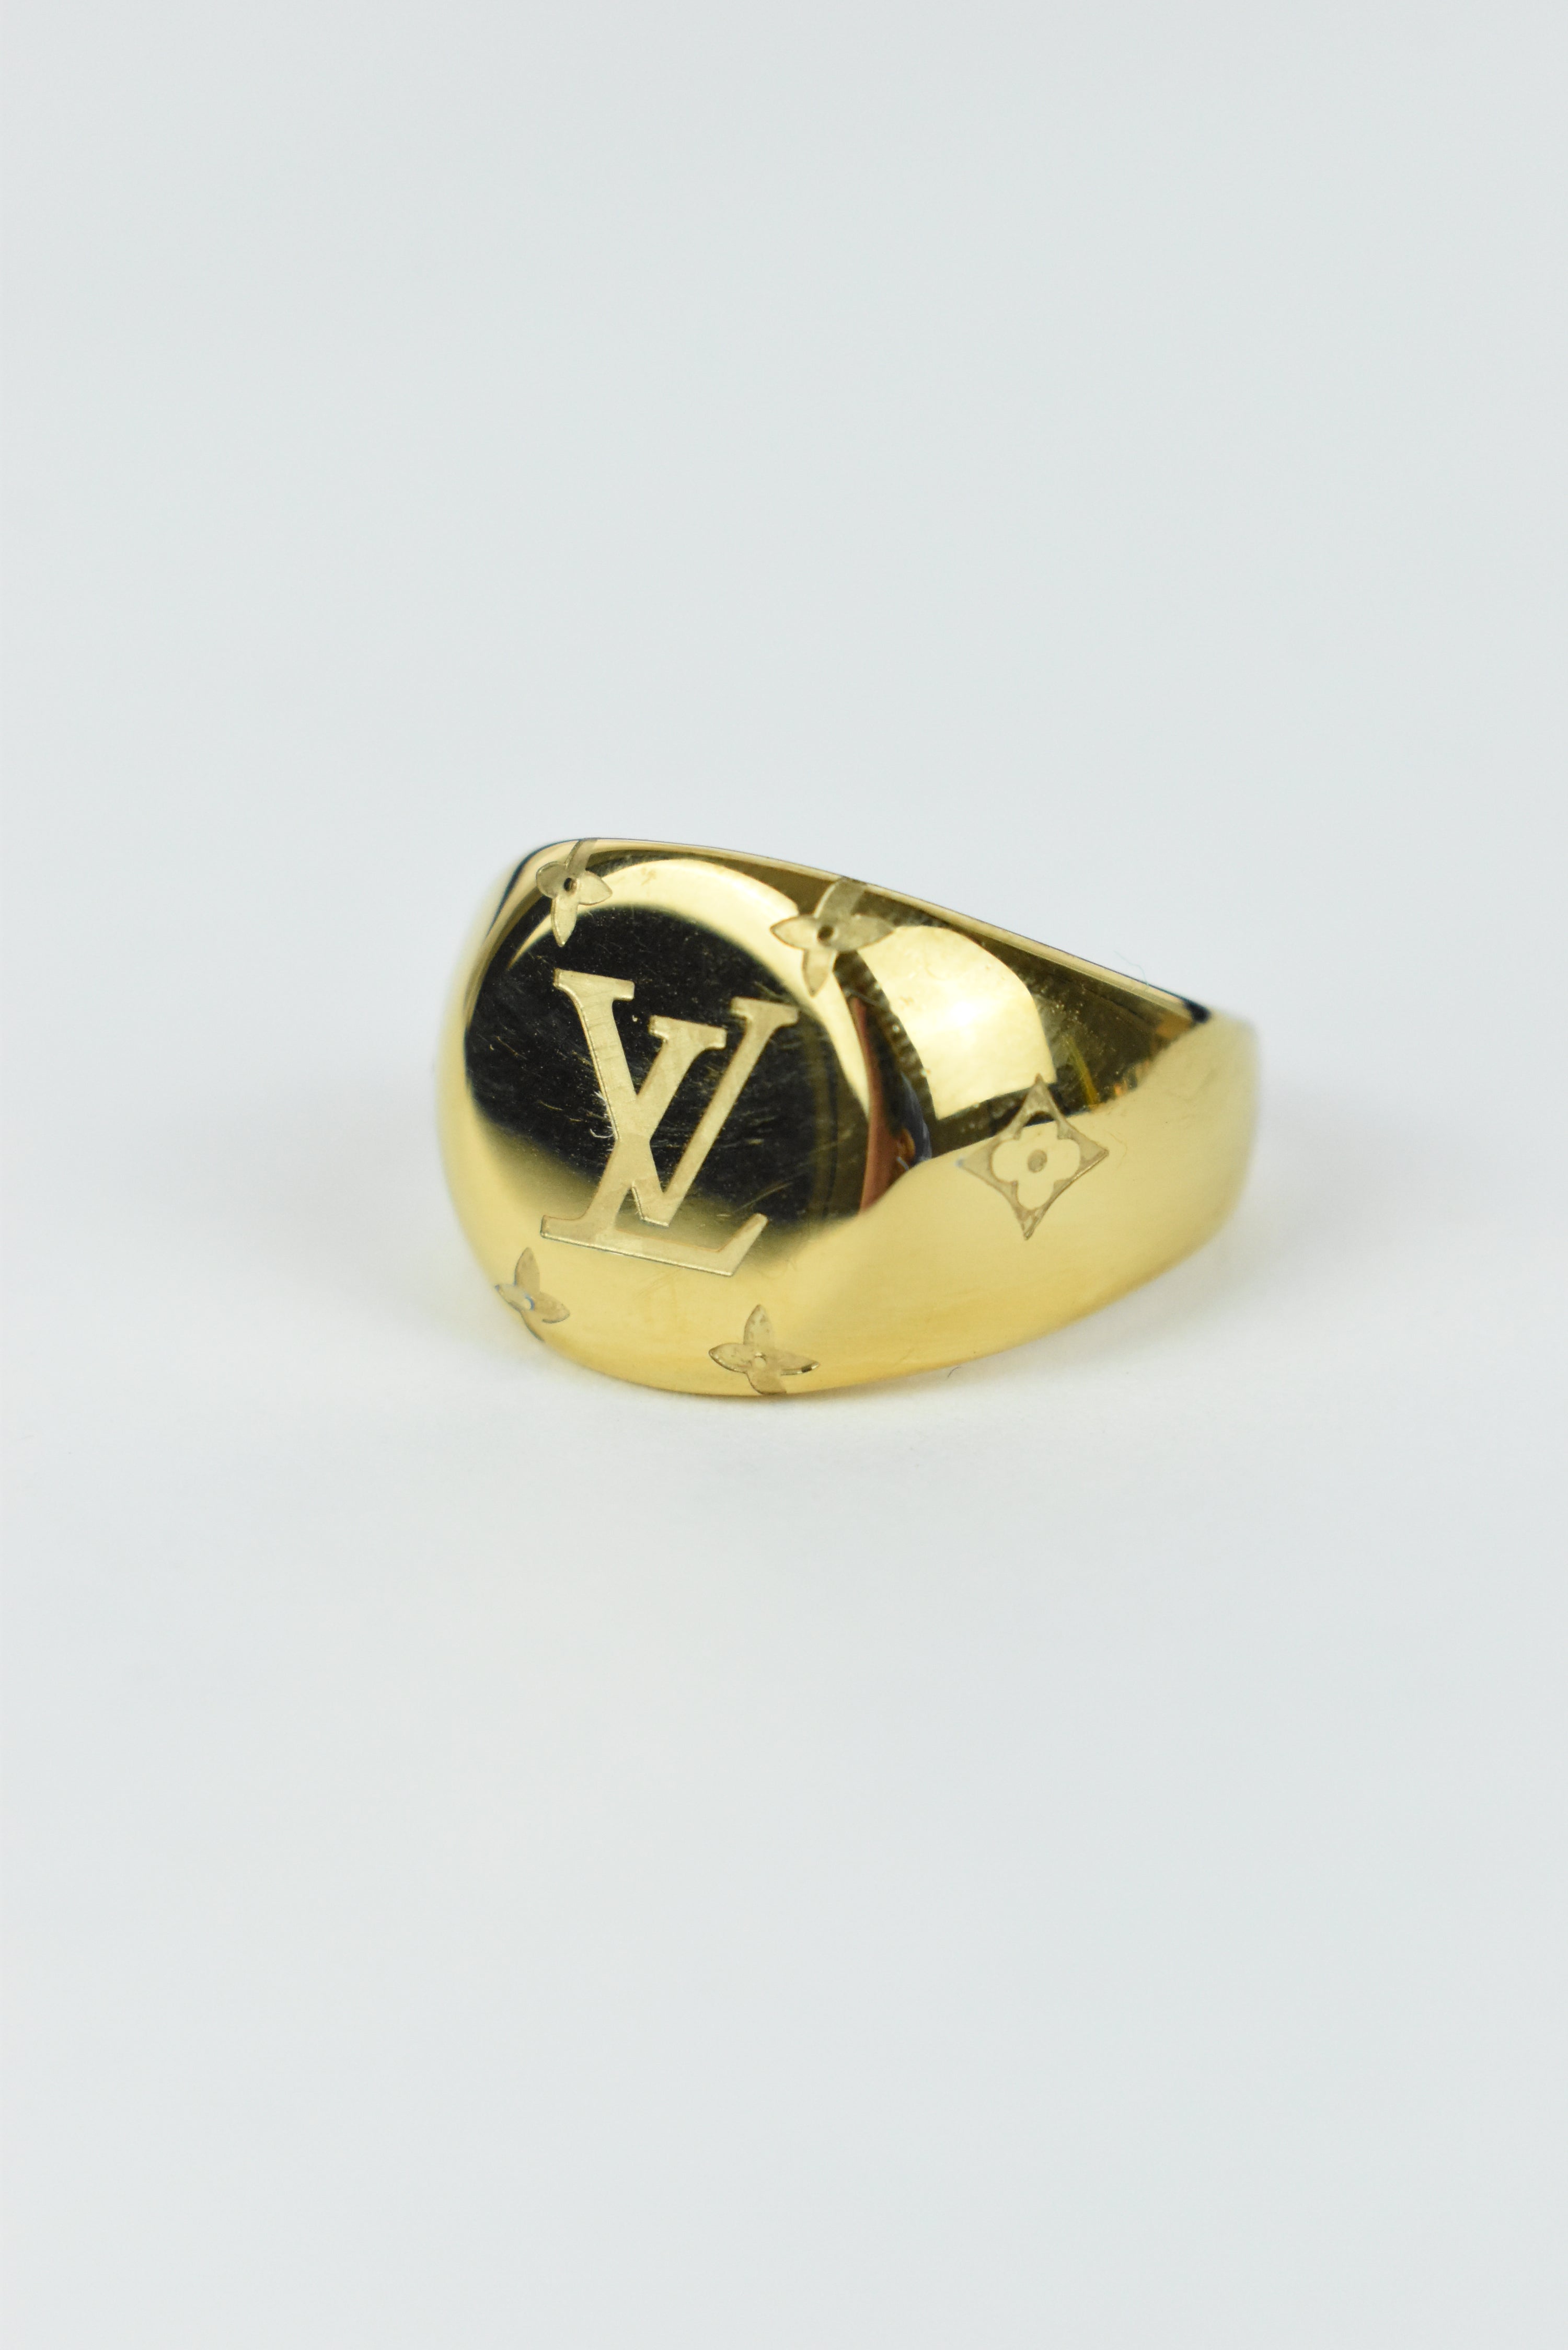 New Louis Vitton Engraved Ring Bootleg Silver/Gold